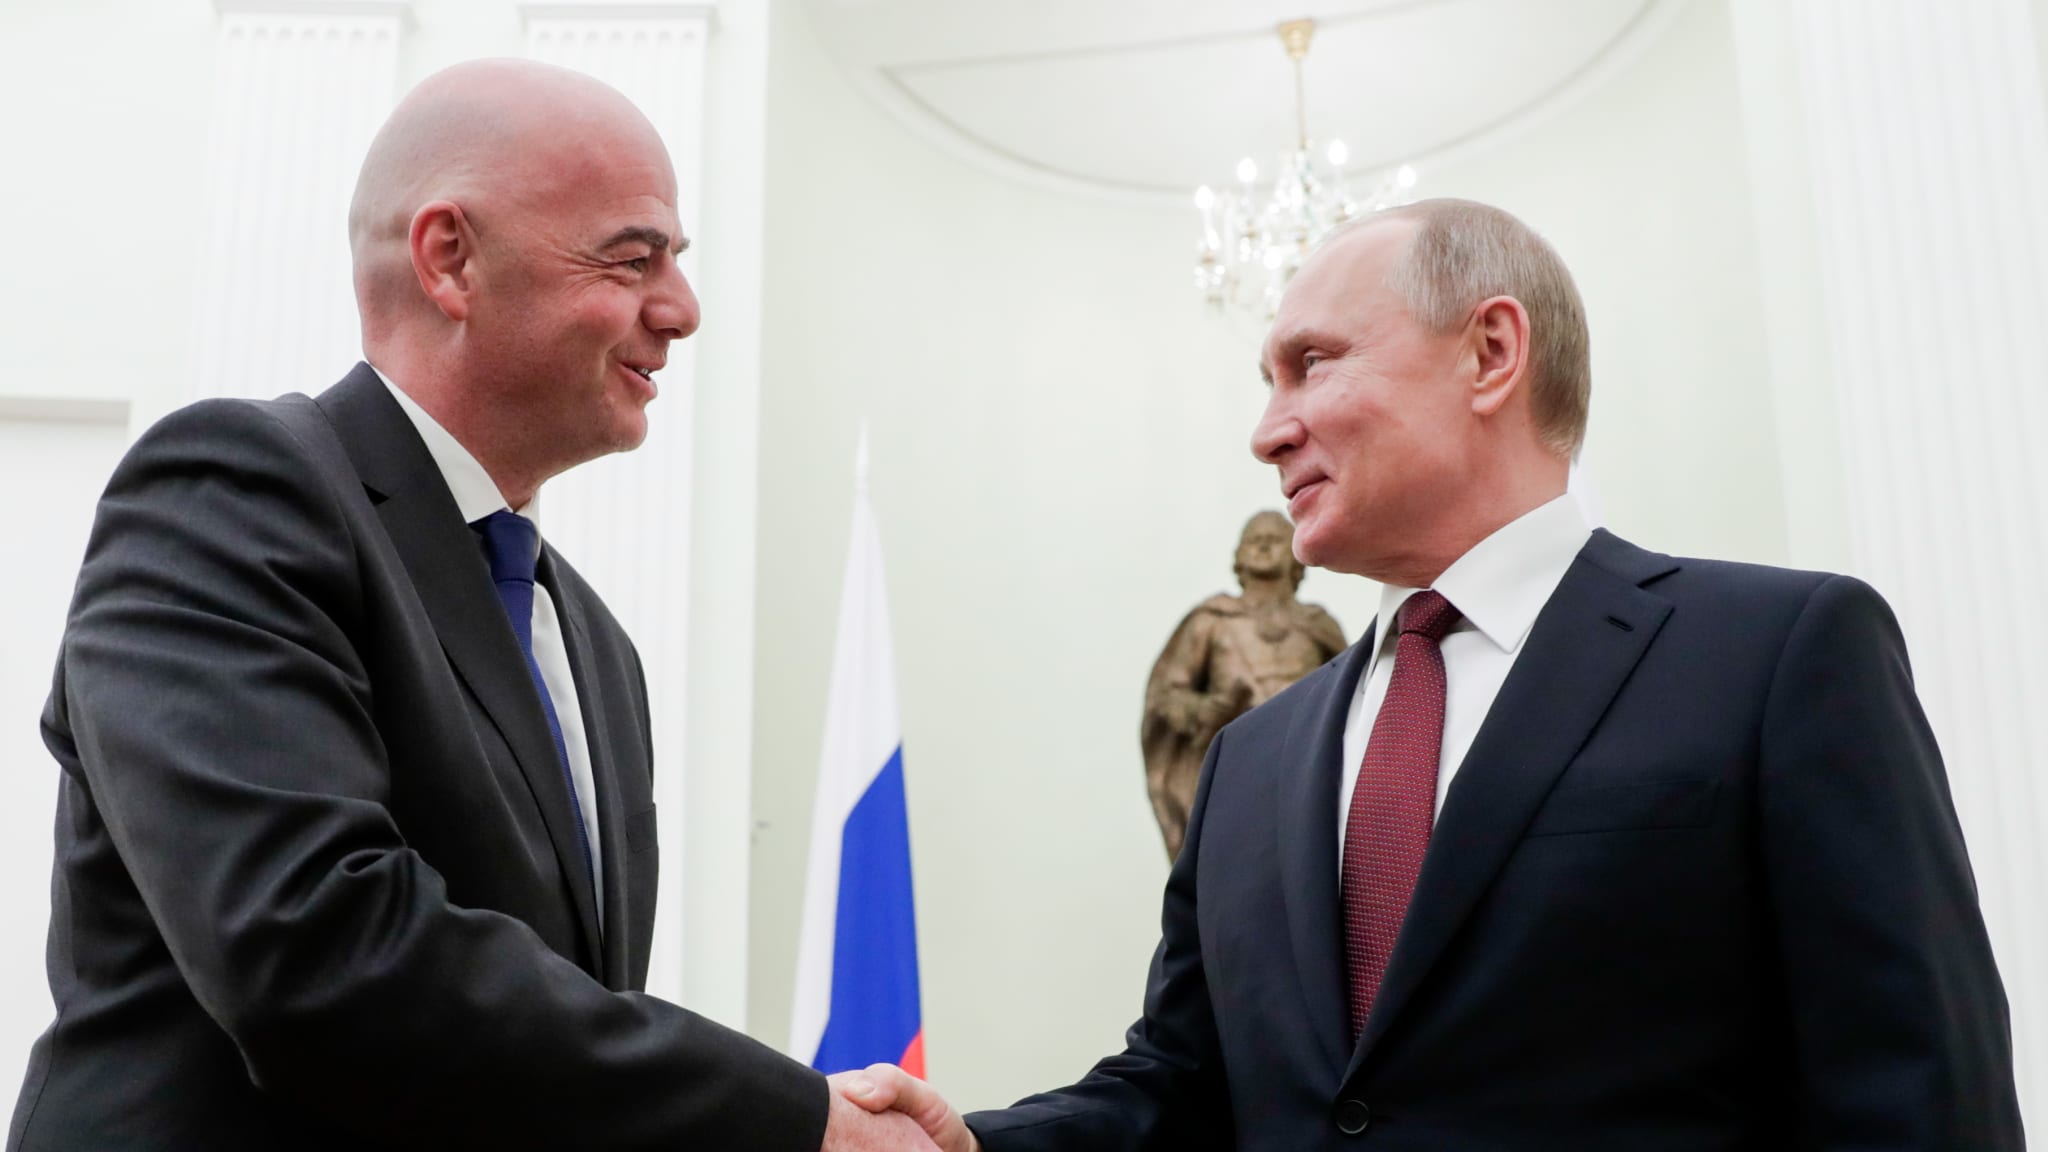 FIFA president Gianni Infantino met with Russia president Vladimir Putin